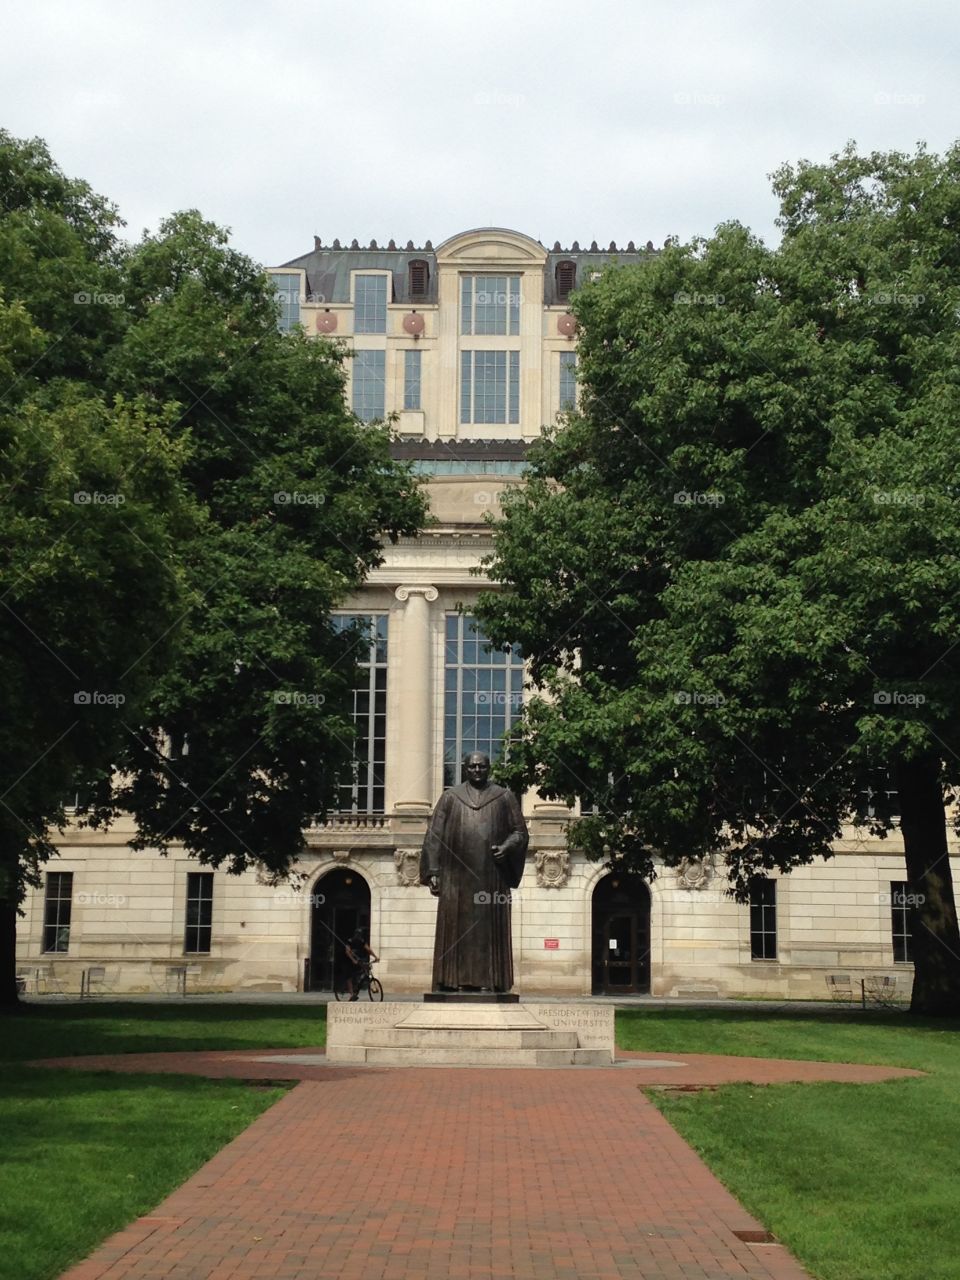 Thompson Statue at The Ohio State University